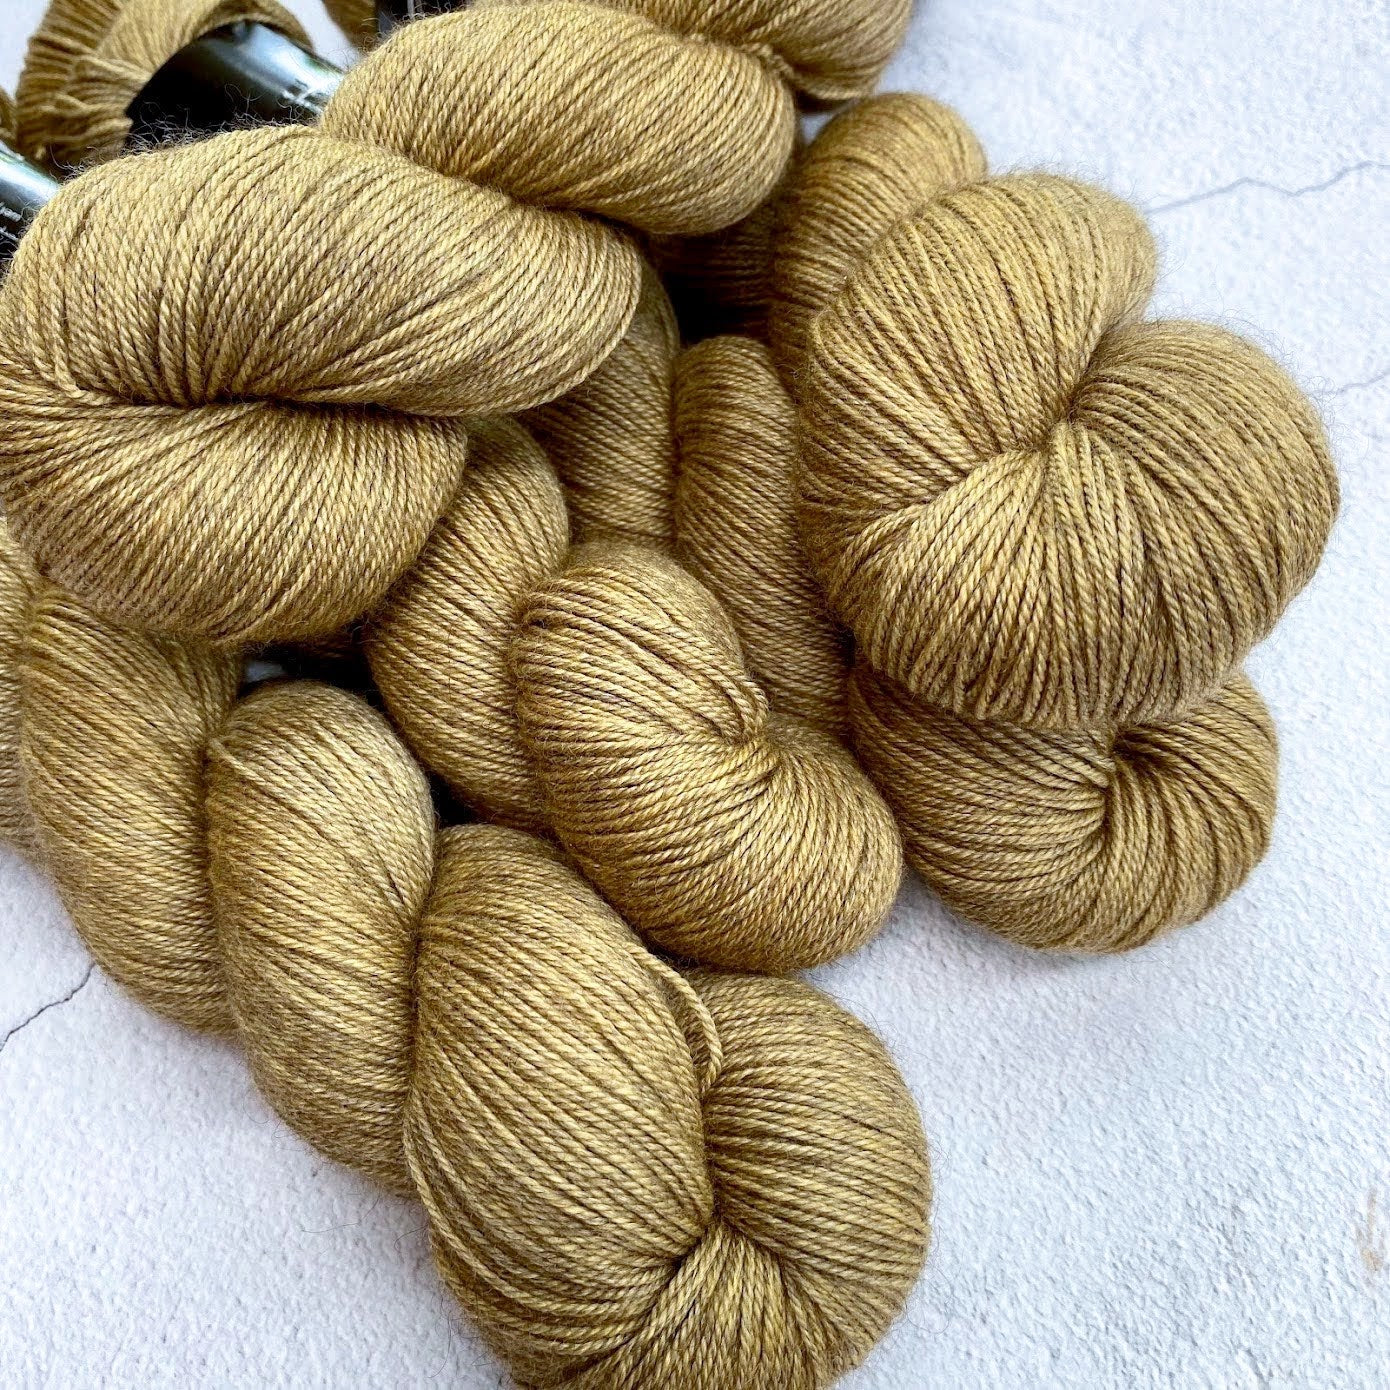 Hand dyed yarn. Medium gold, semi solid, hand dyed yarn on Merino Silk Yak fingering weight 4 ply yarn.